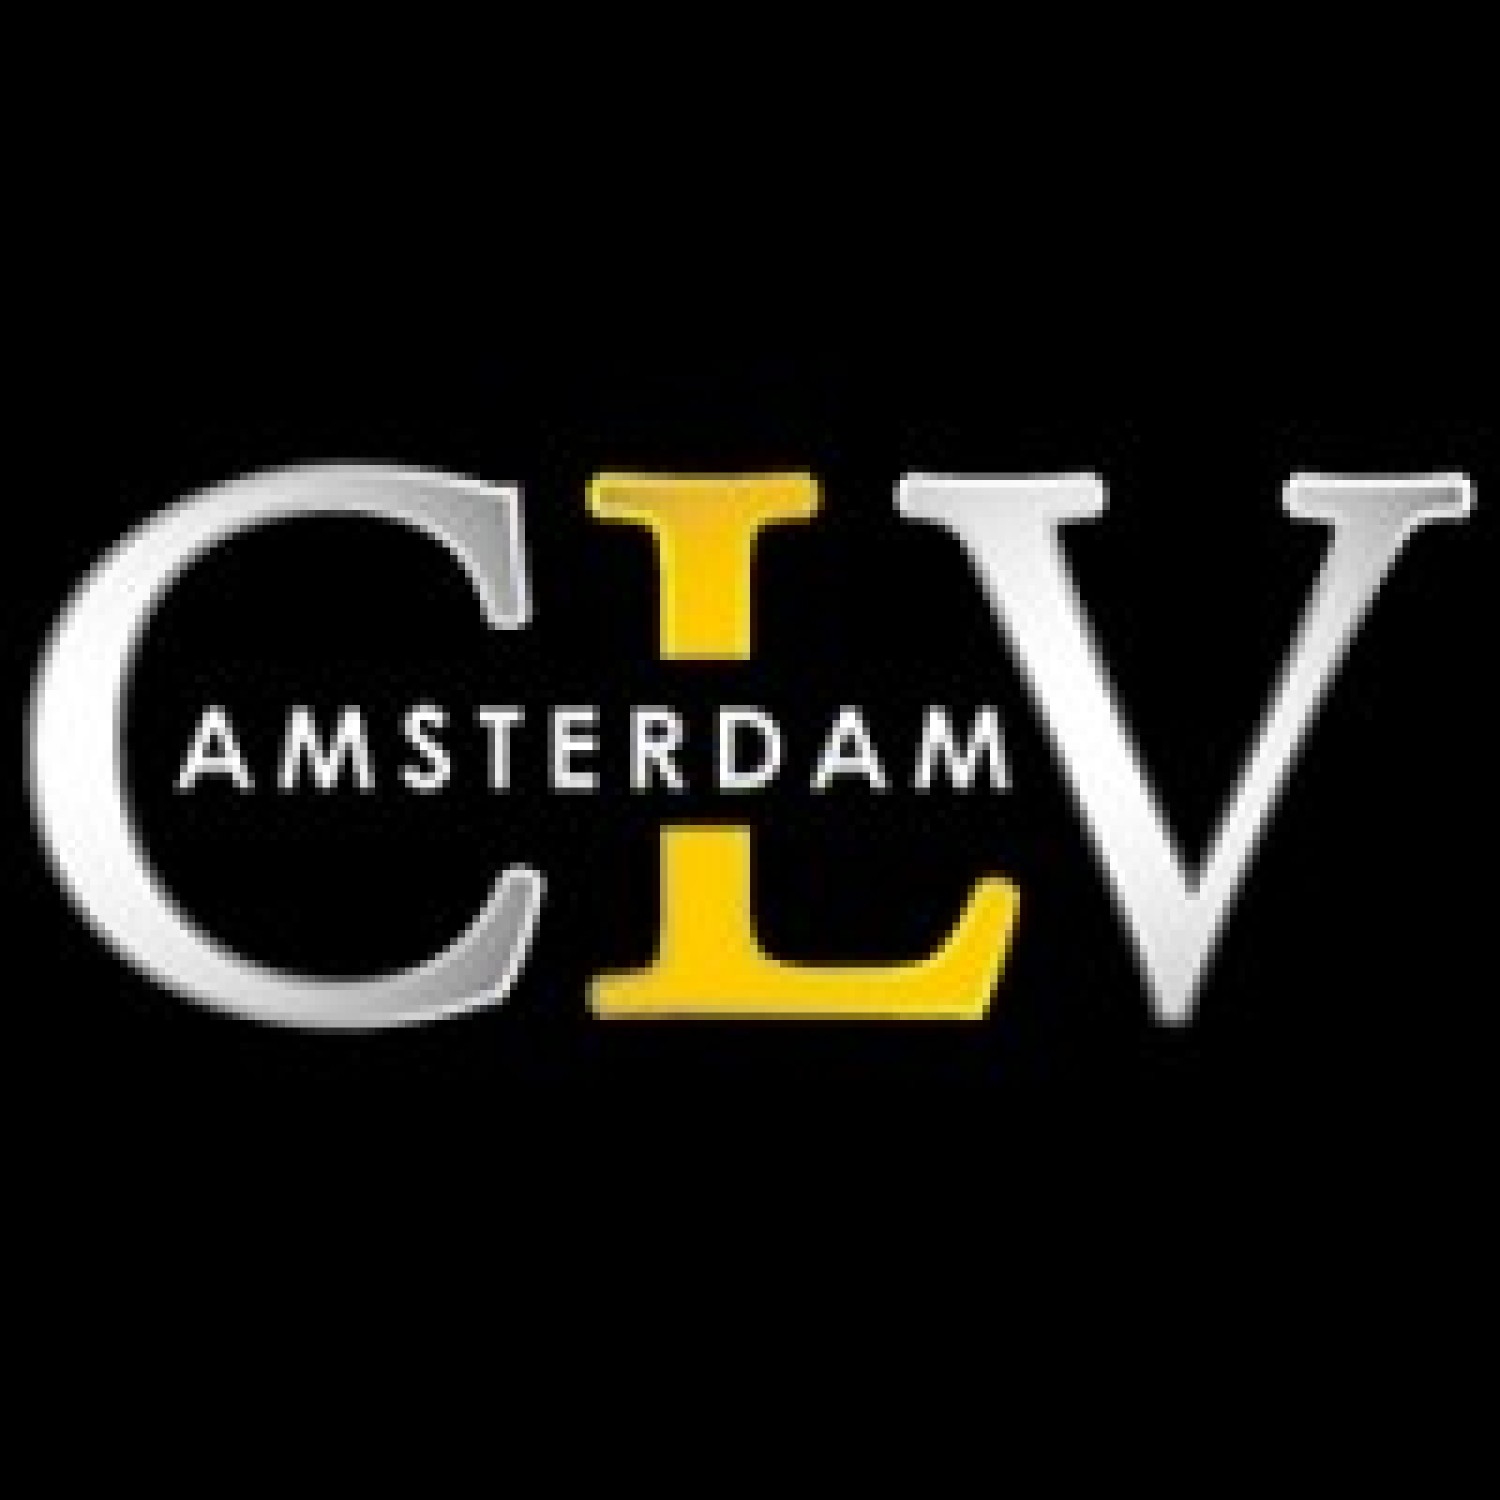 CLV Amsterdam